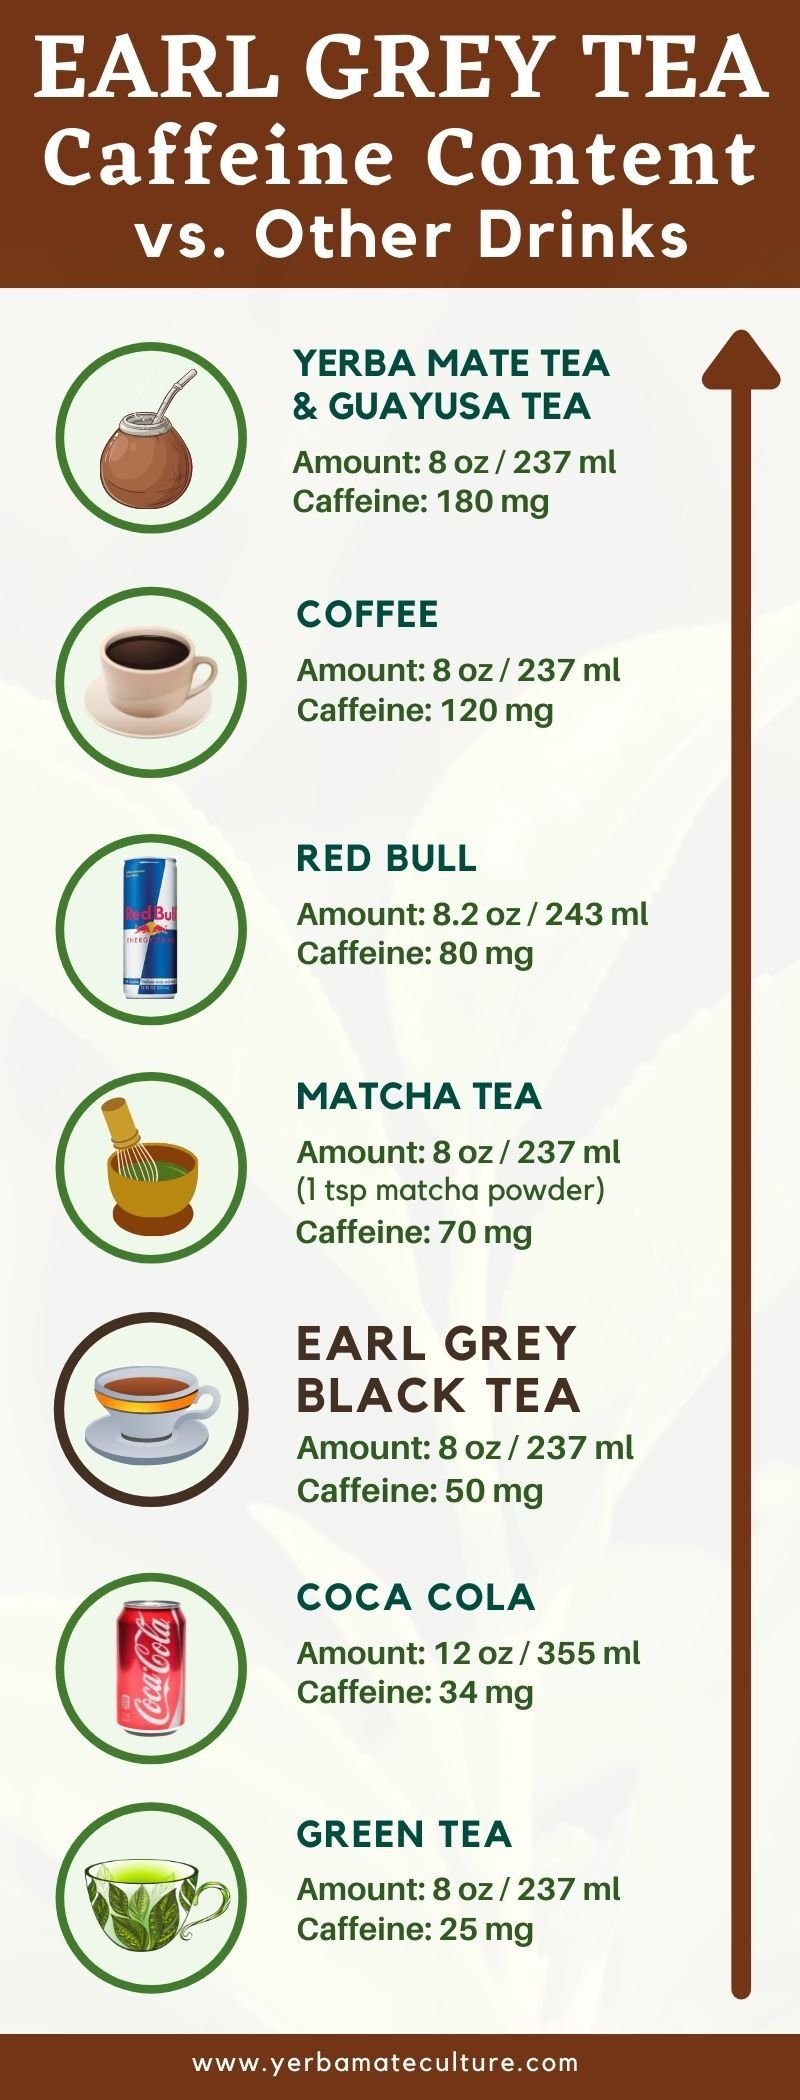 Earl Grey Black Tea Caffeine Content Infographic